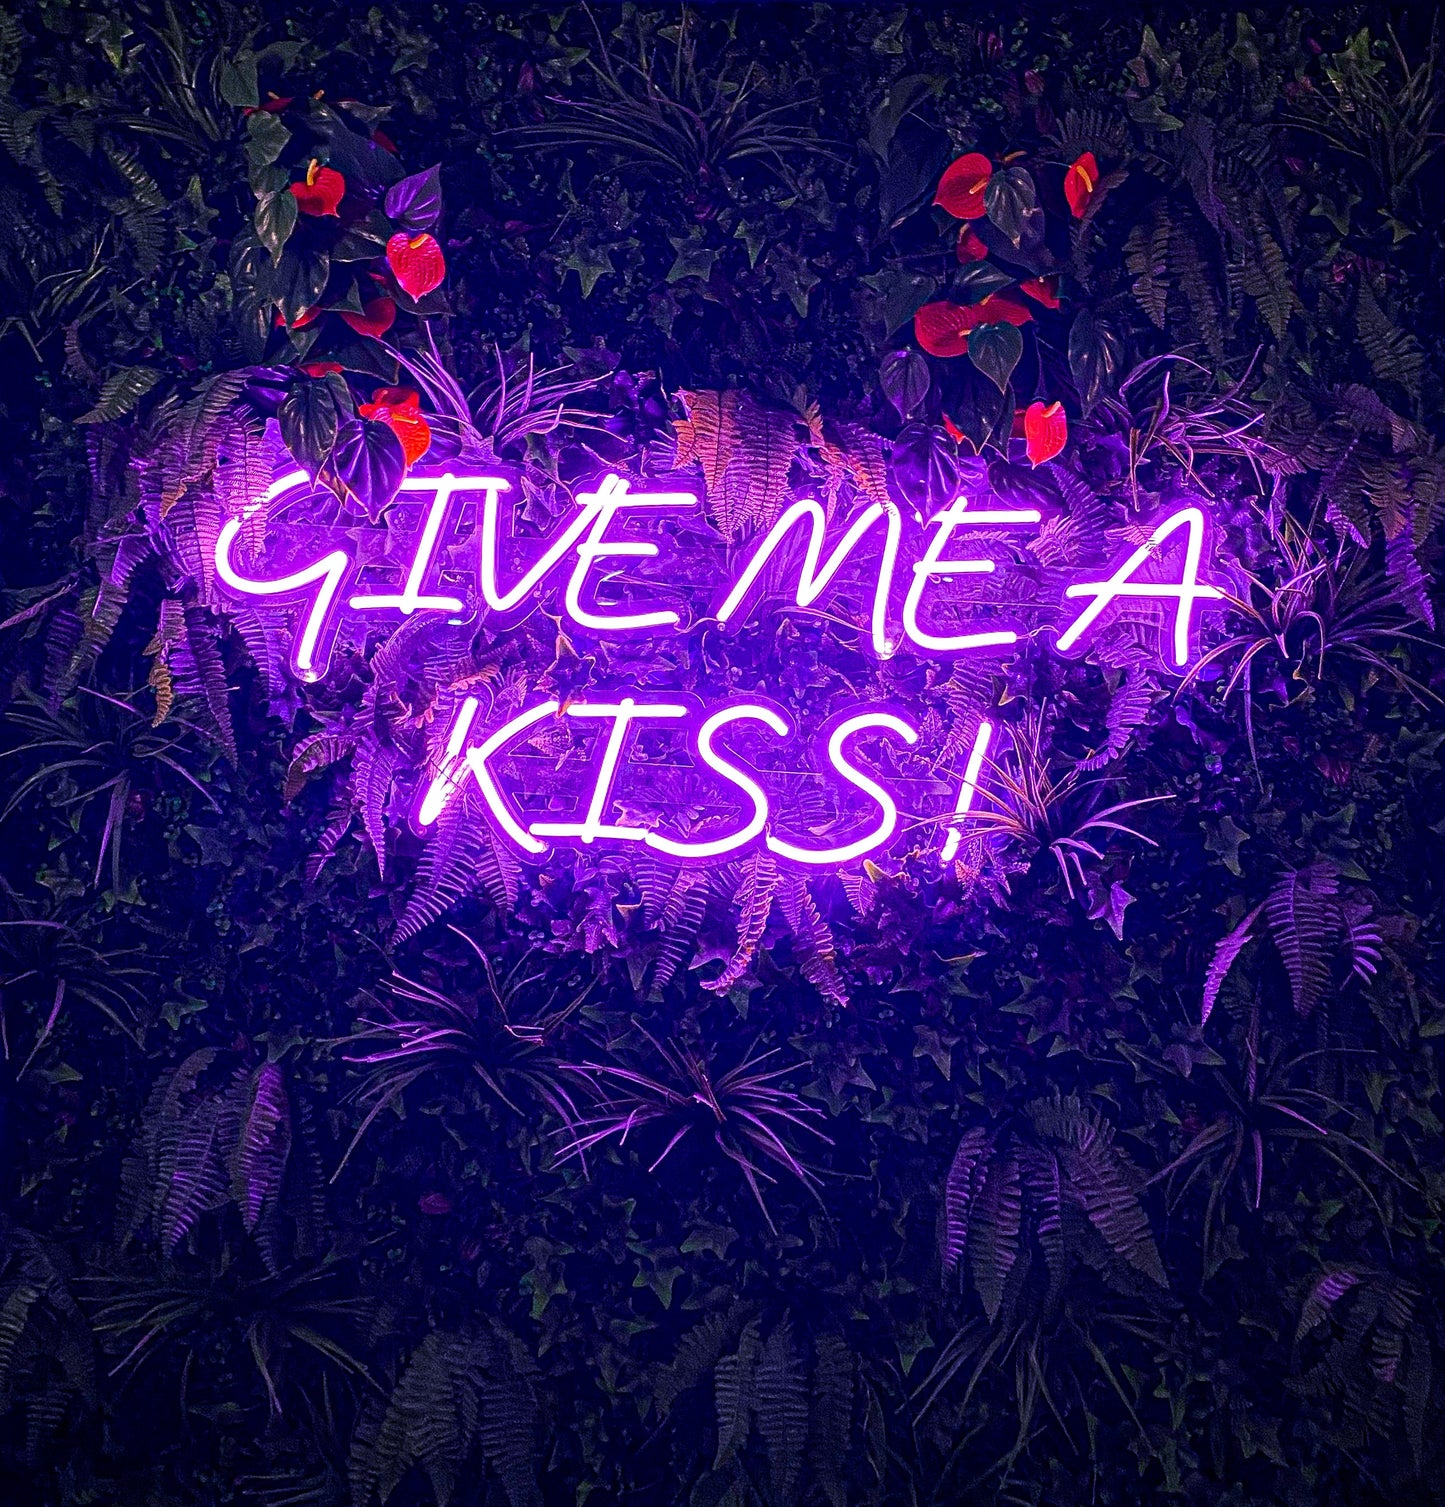 Give Me a Kiss!